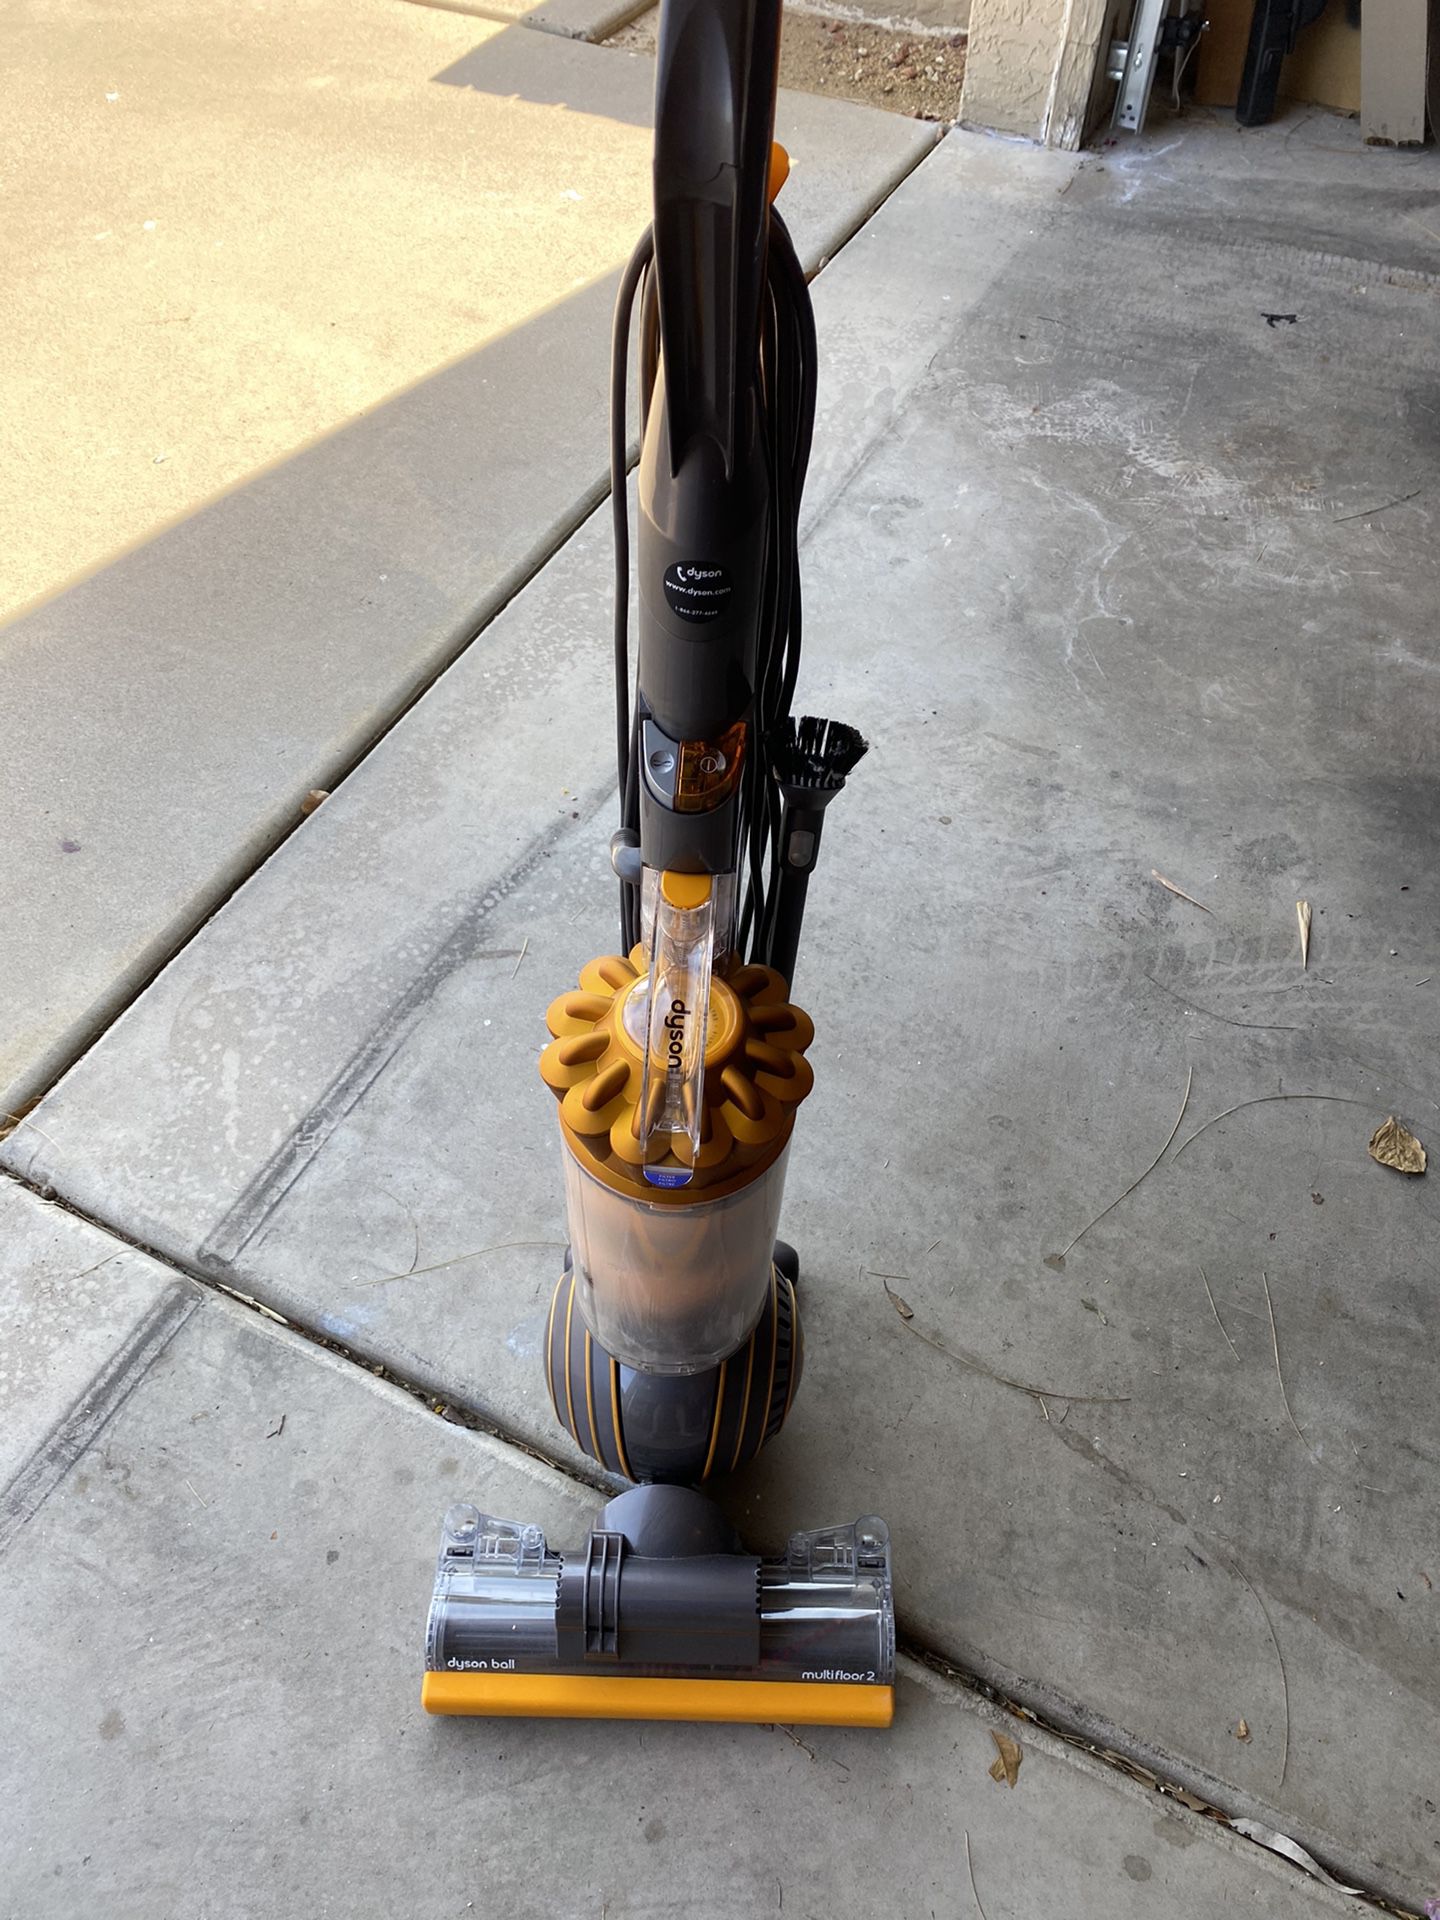 Dyson ball roller vacuum